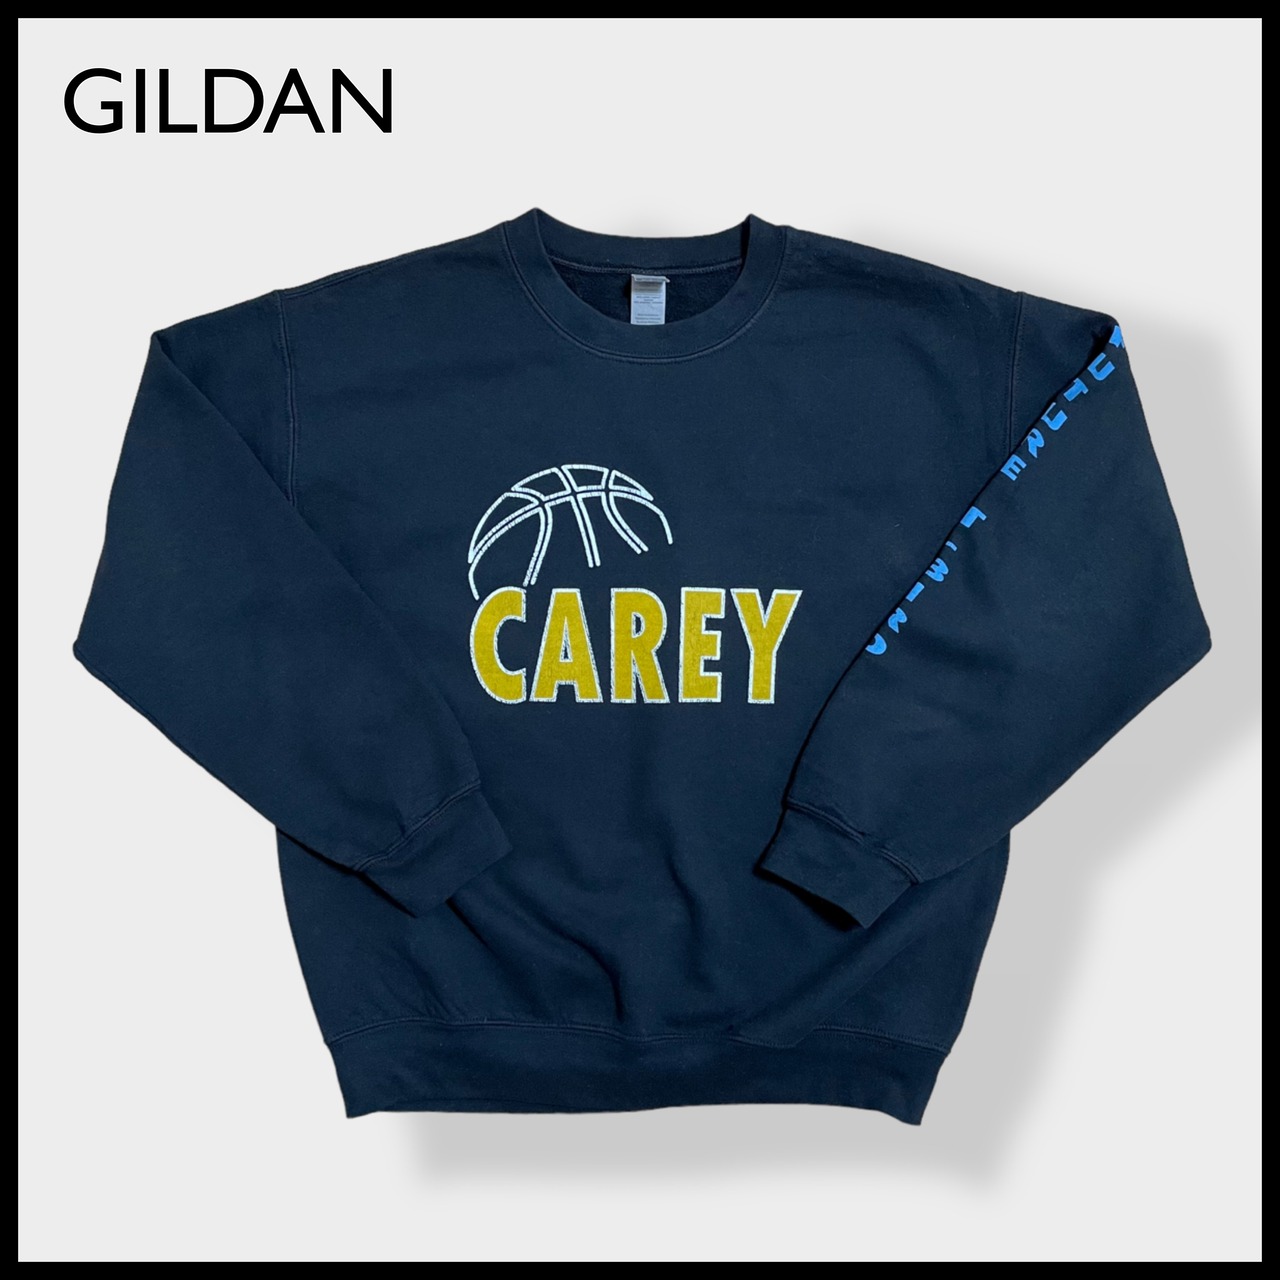 【GILDAN】バスケットボール LADY BRAVES ロゴ プリント バックロゴ 袖プリント スウェットトレーナー プルオーバー 黒 M US古着